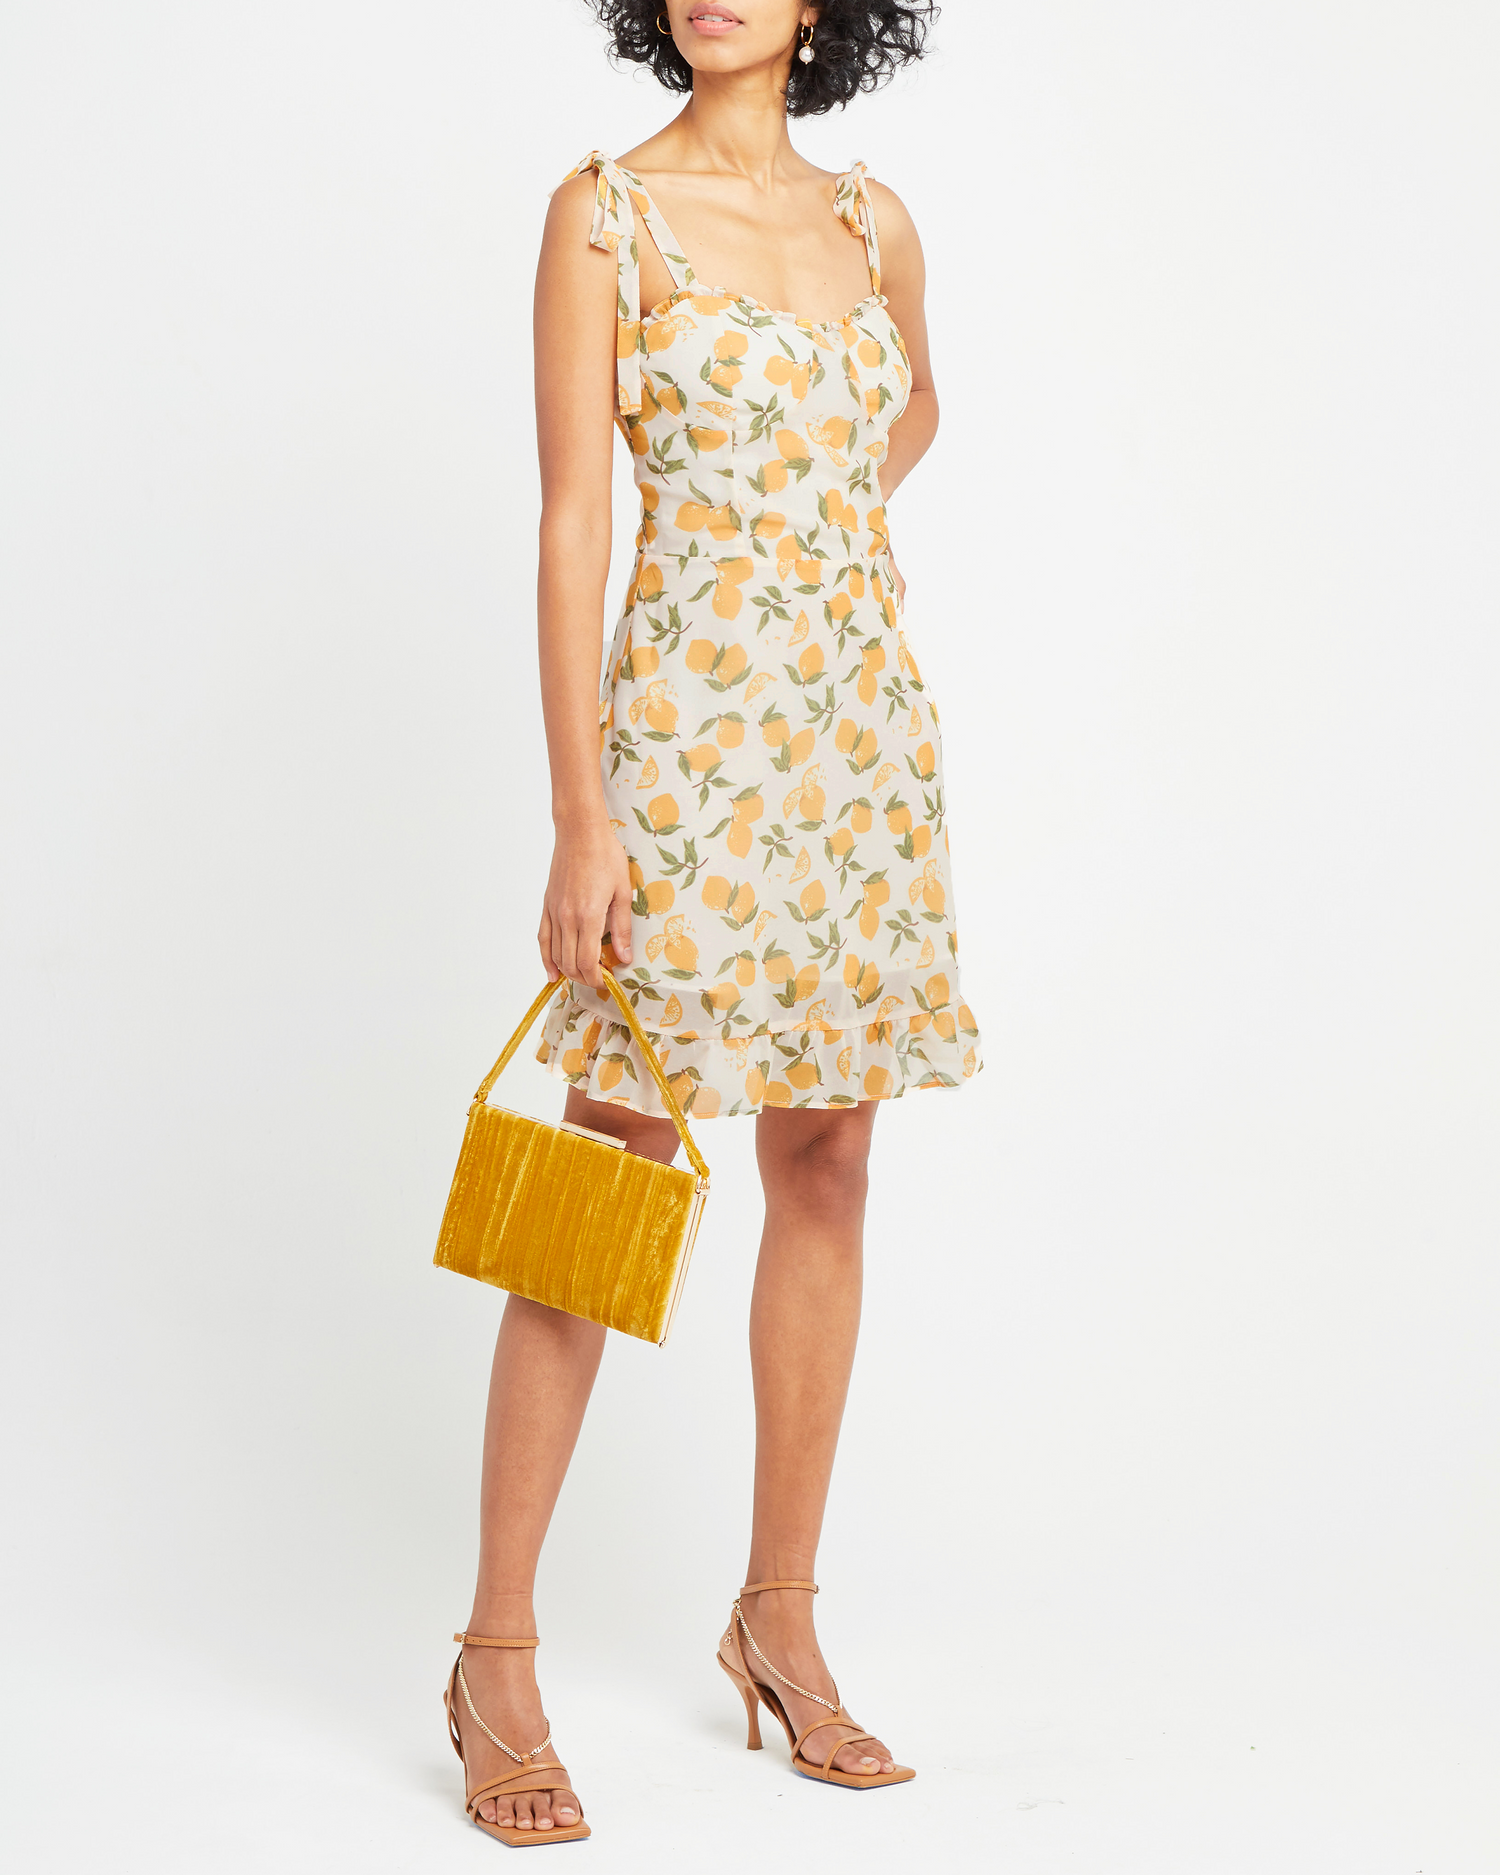 First image of Sunny Dress, a yellow mini dress, ruffle, ribbon, tie straps, ribbon, bows, lemon print